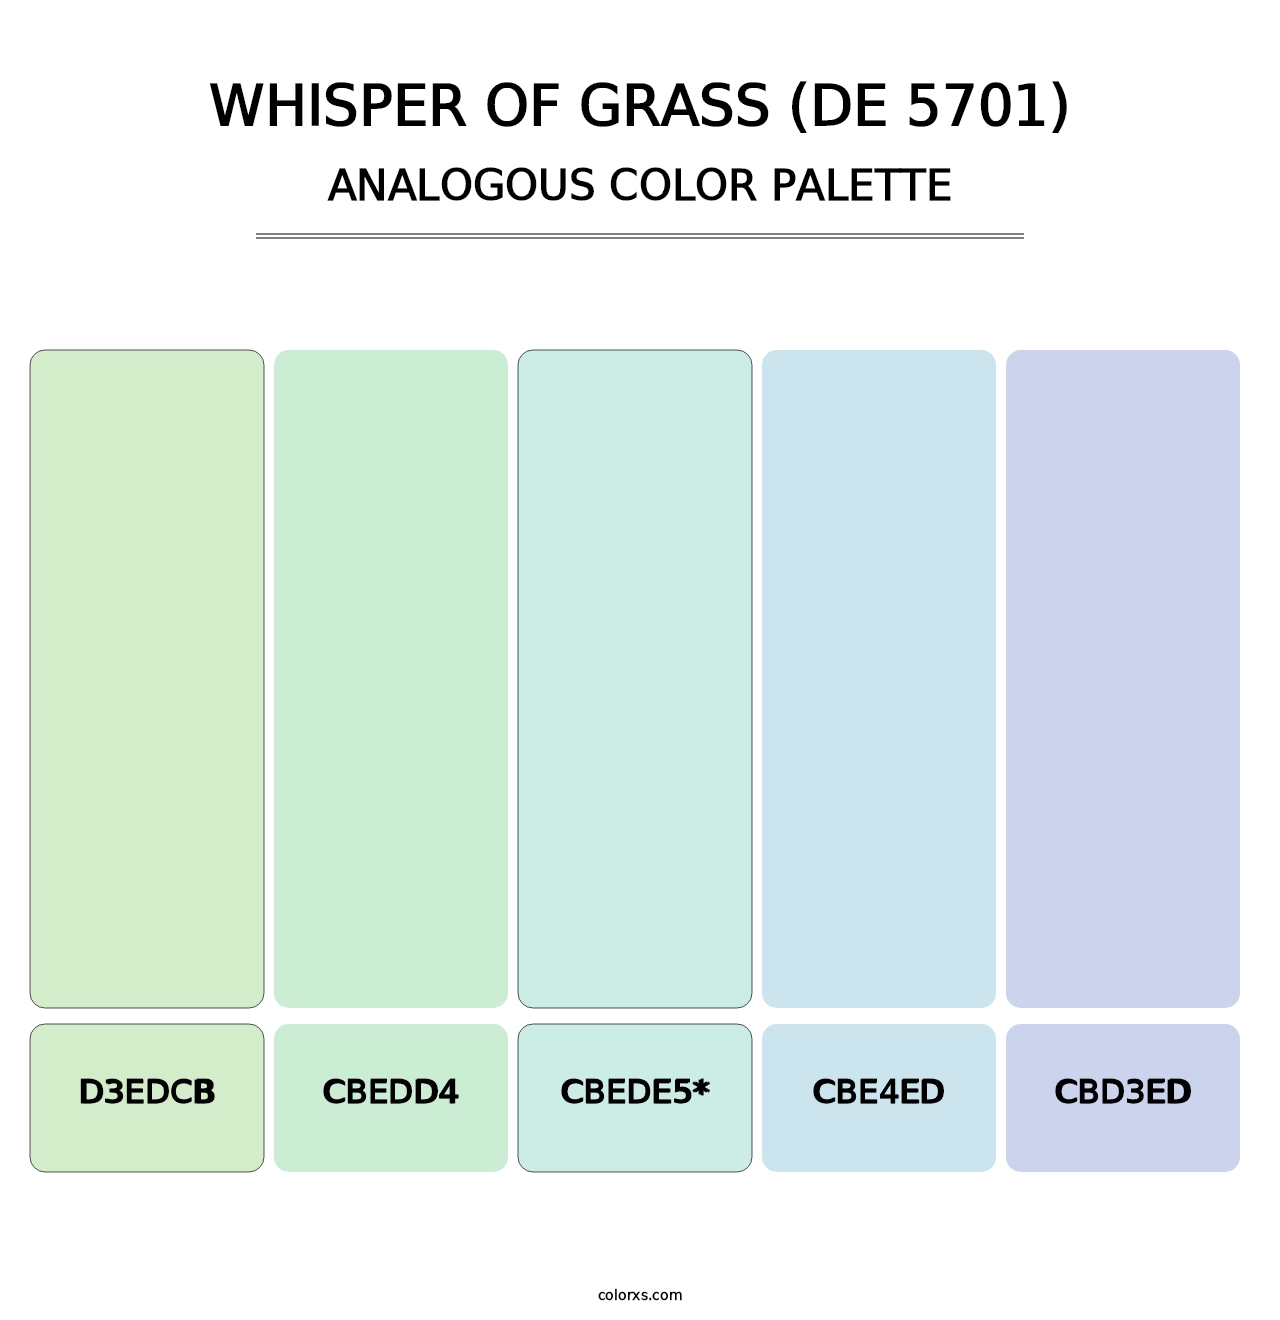 Whisper of Grass (DE 5701) - Analogous Color Palette